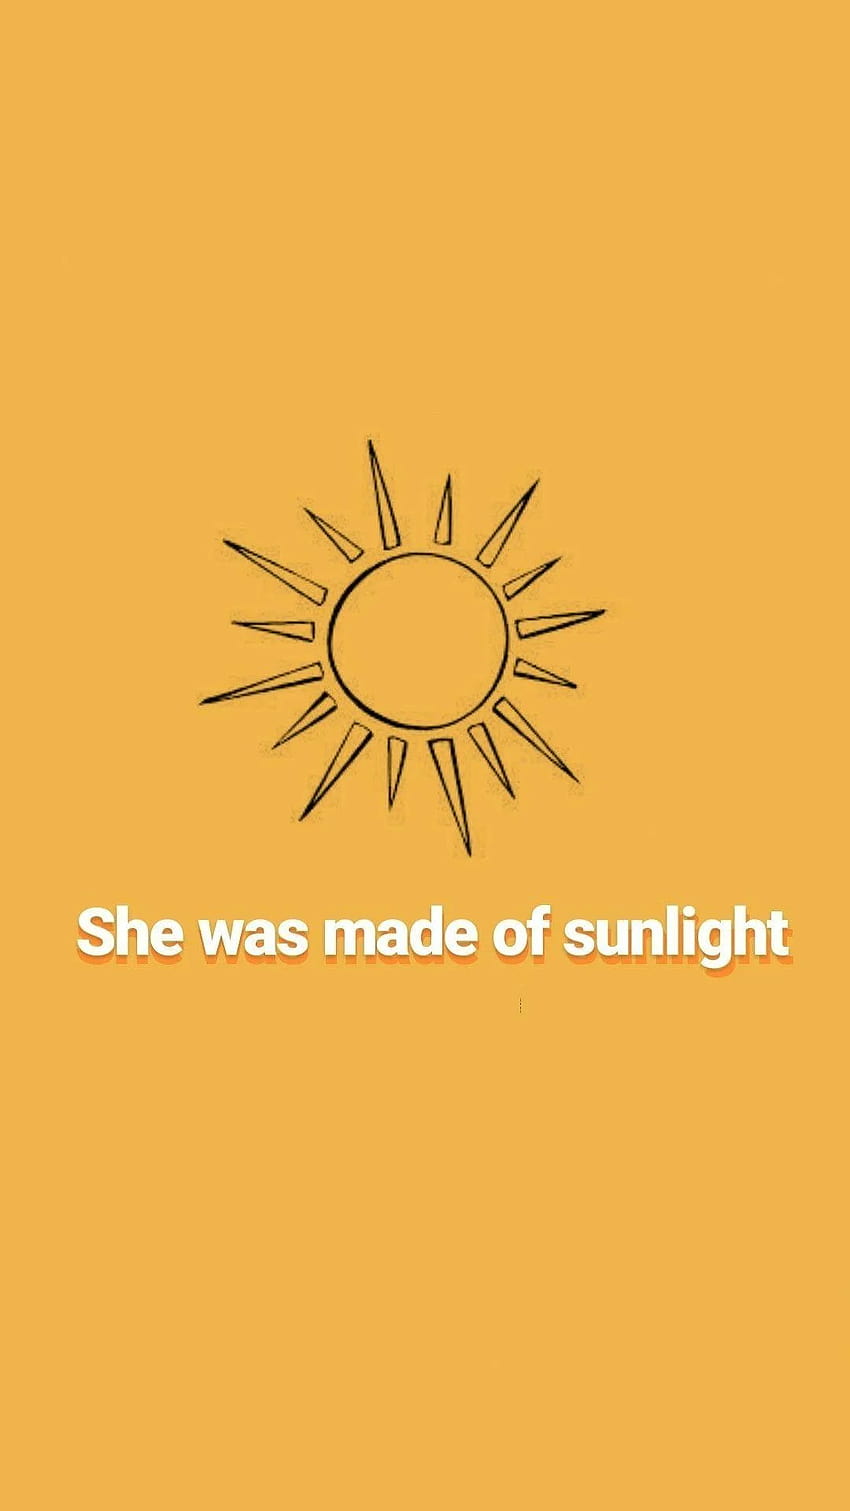 She was made of sunlight - Sunshine